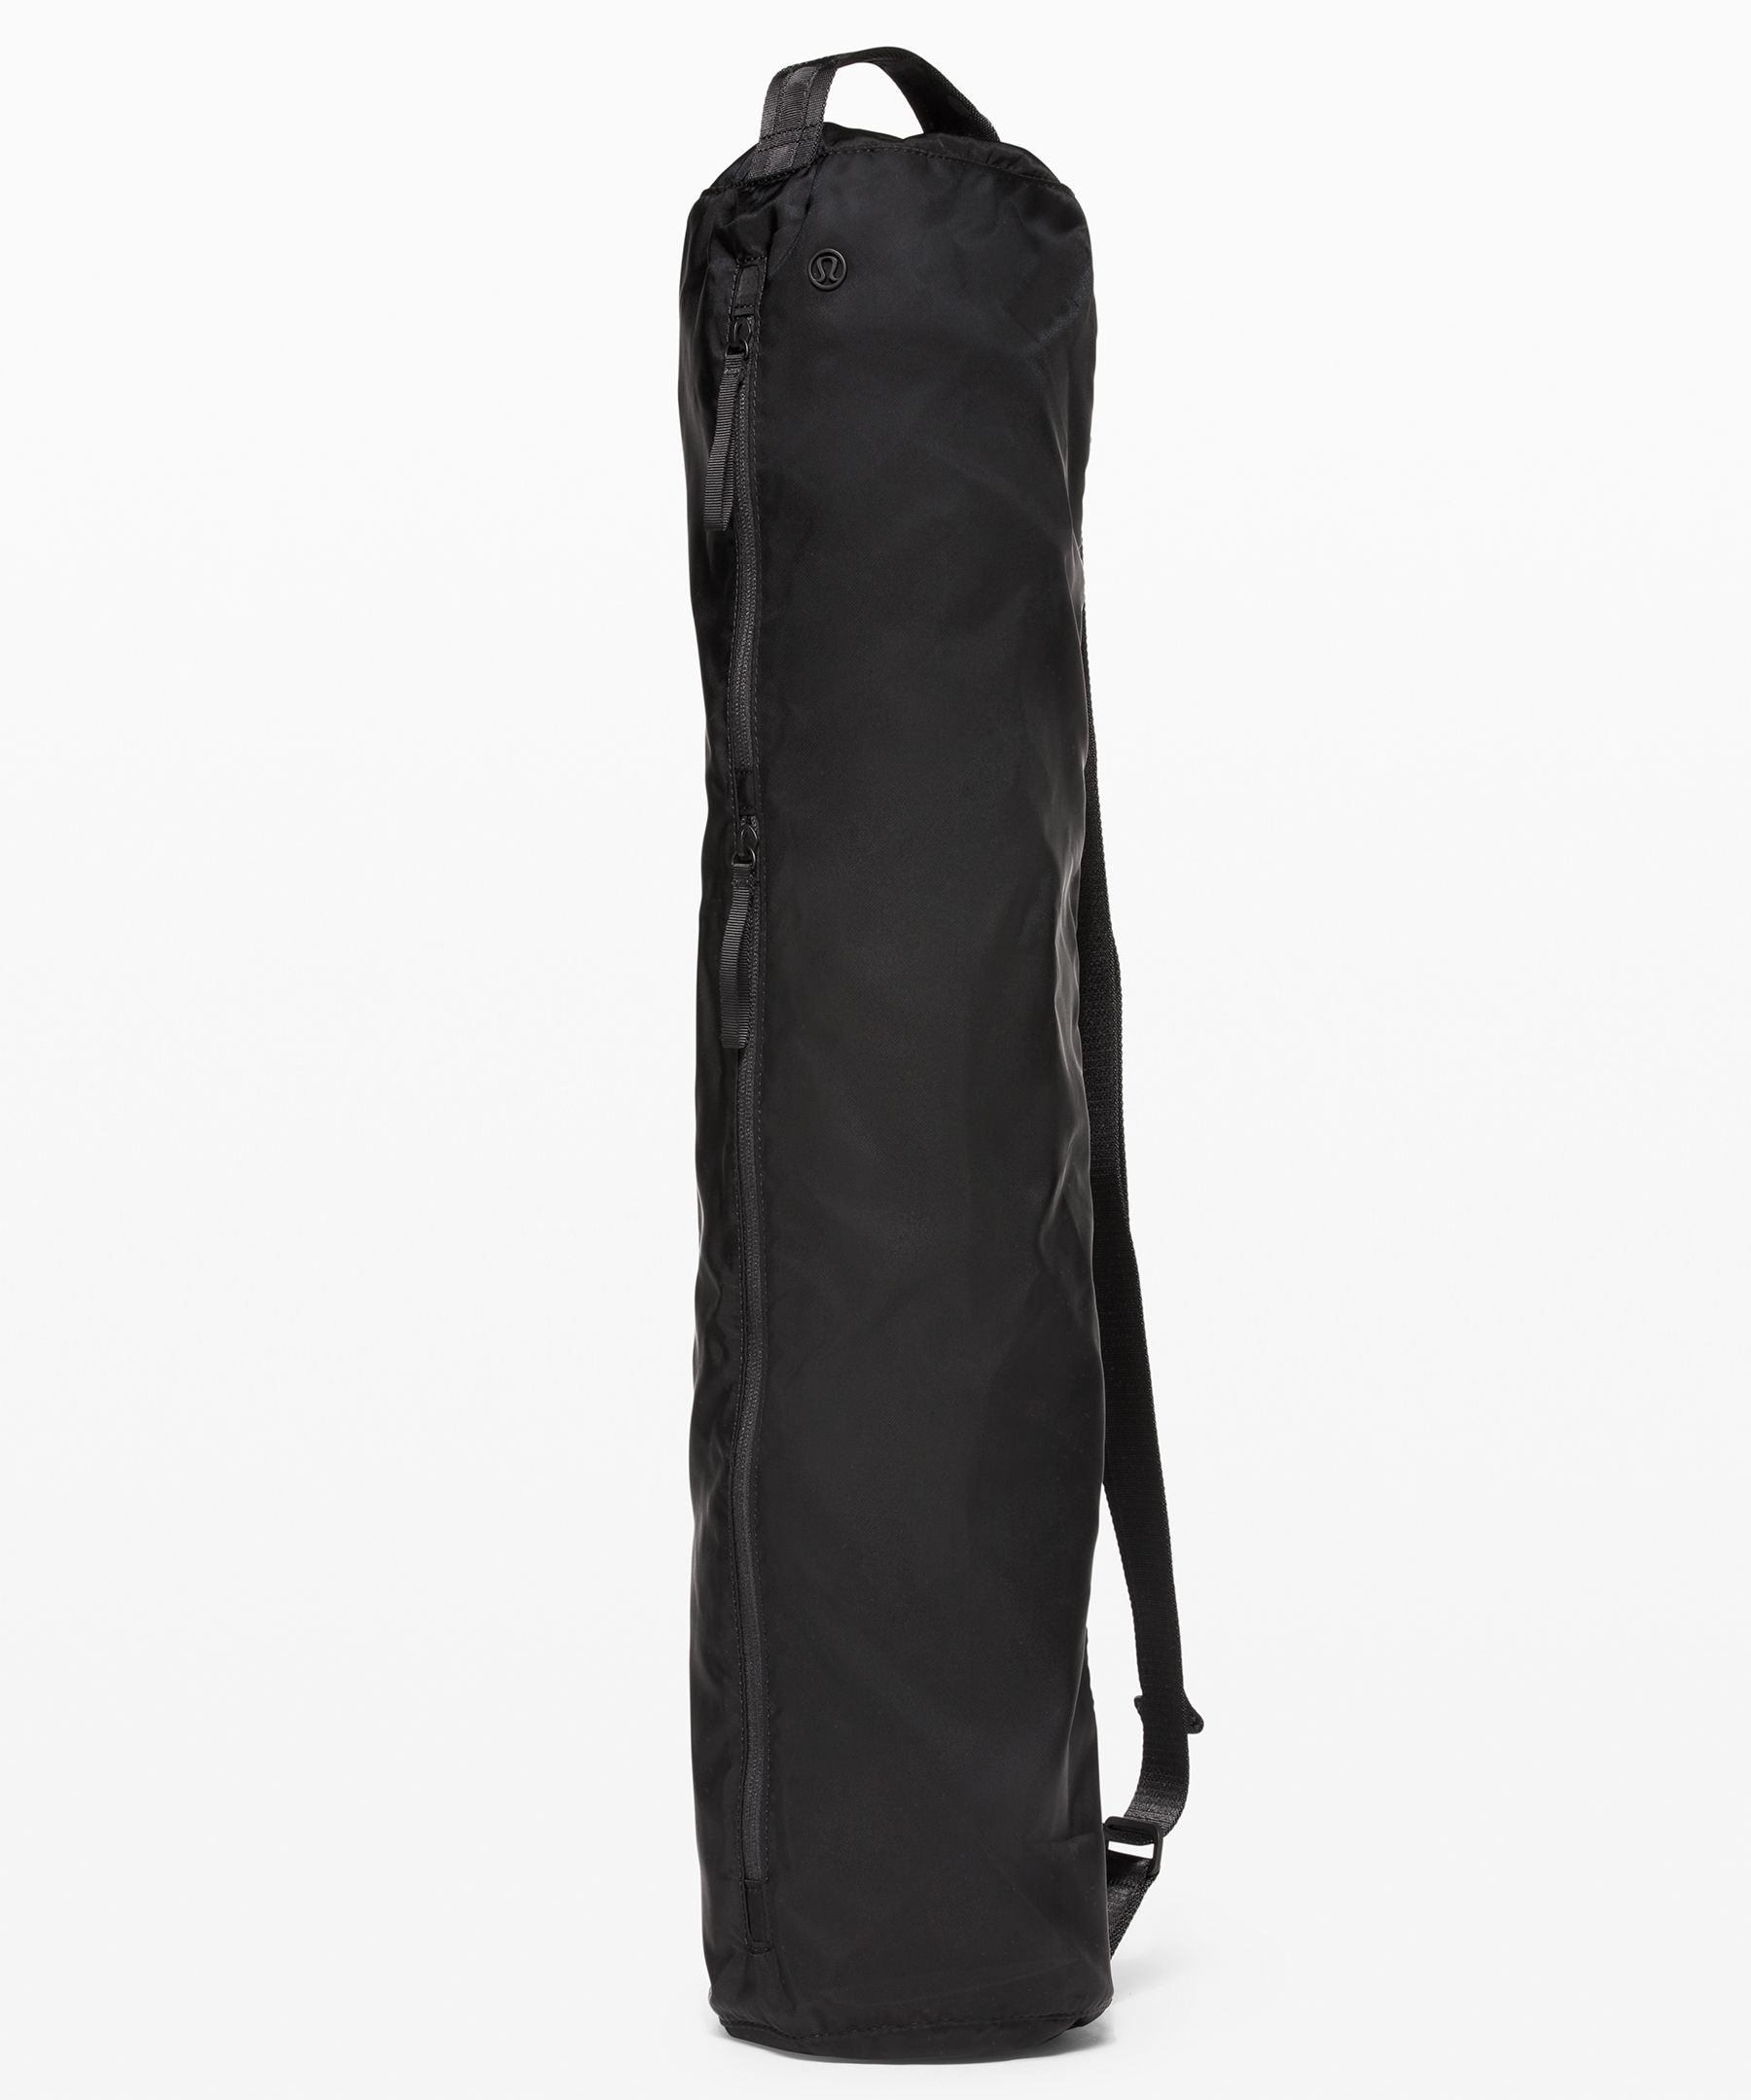 lululemon black yoga bag